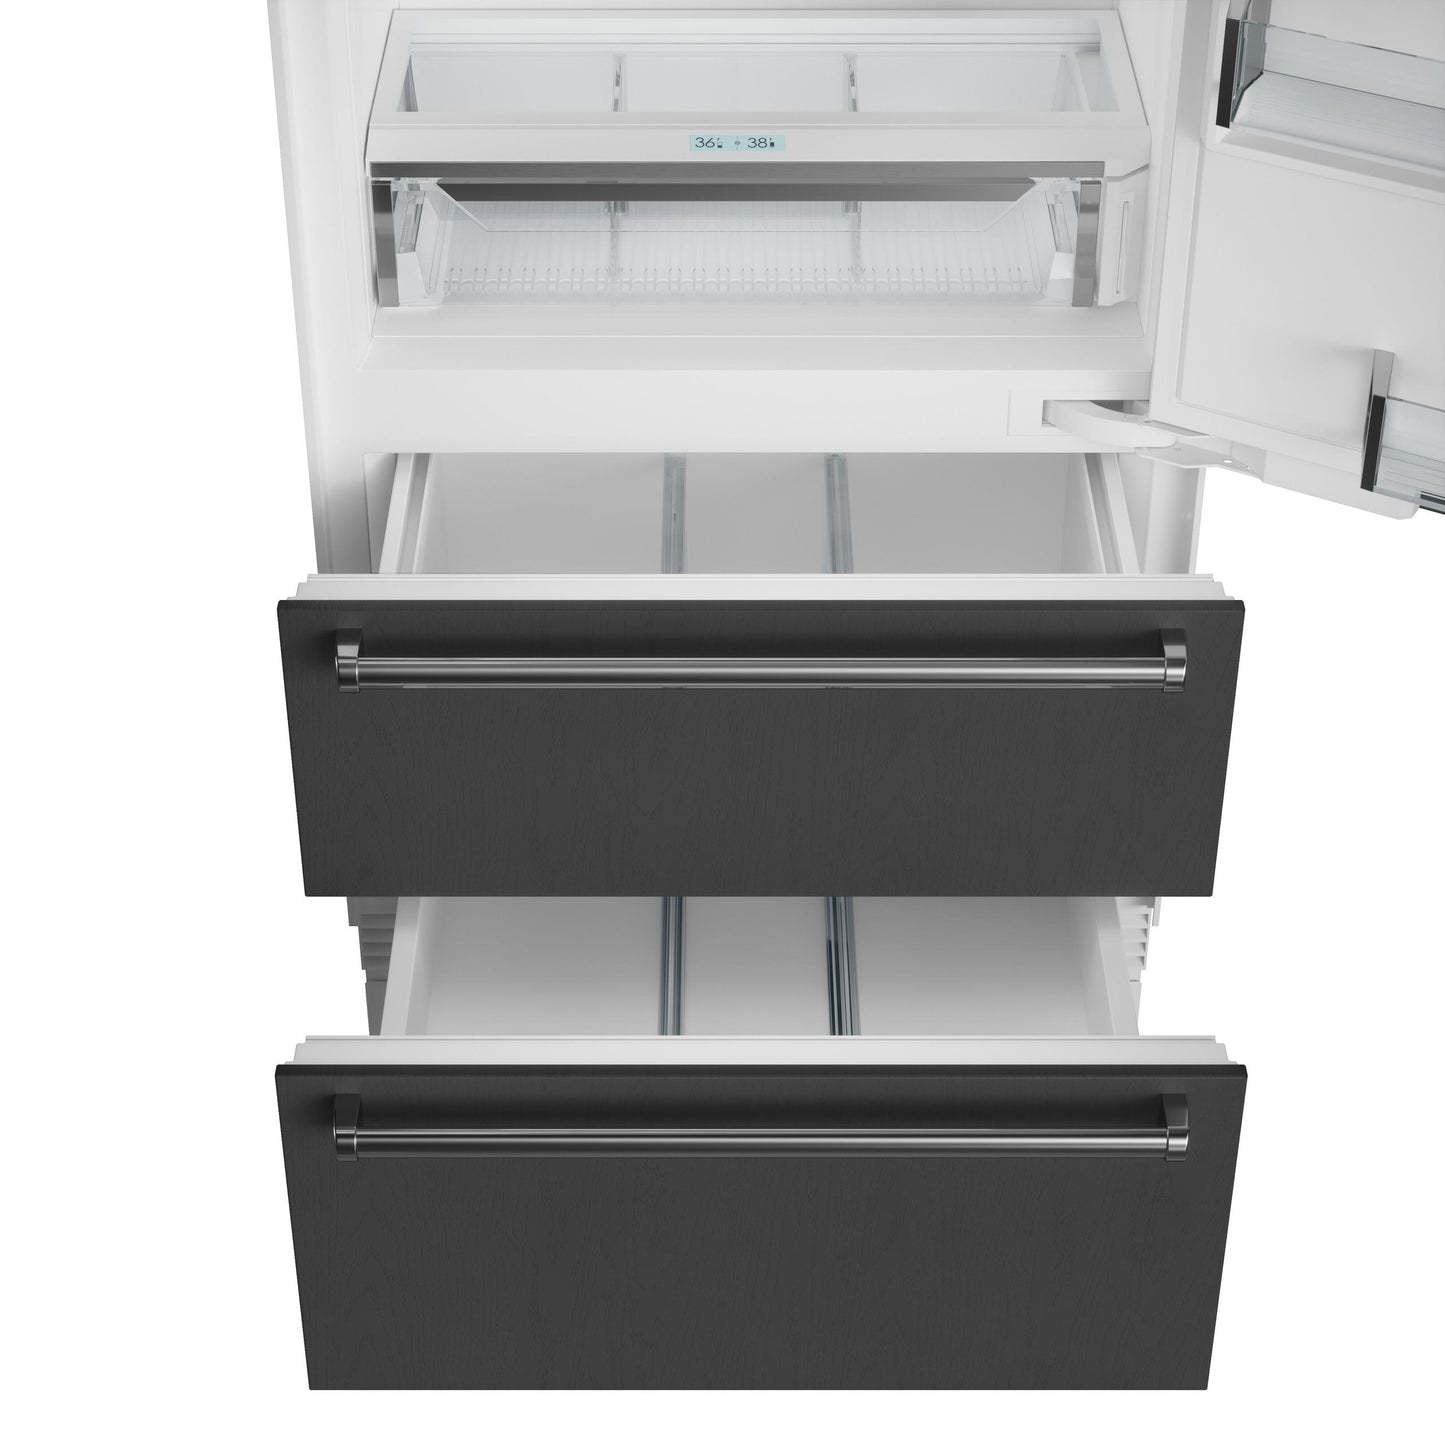 Sub-Zero DET3650RL 36" Designer Over-And-Under Refrigerator - Panel Ready